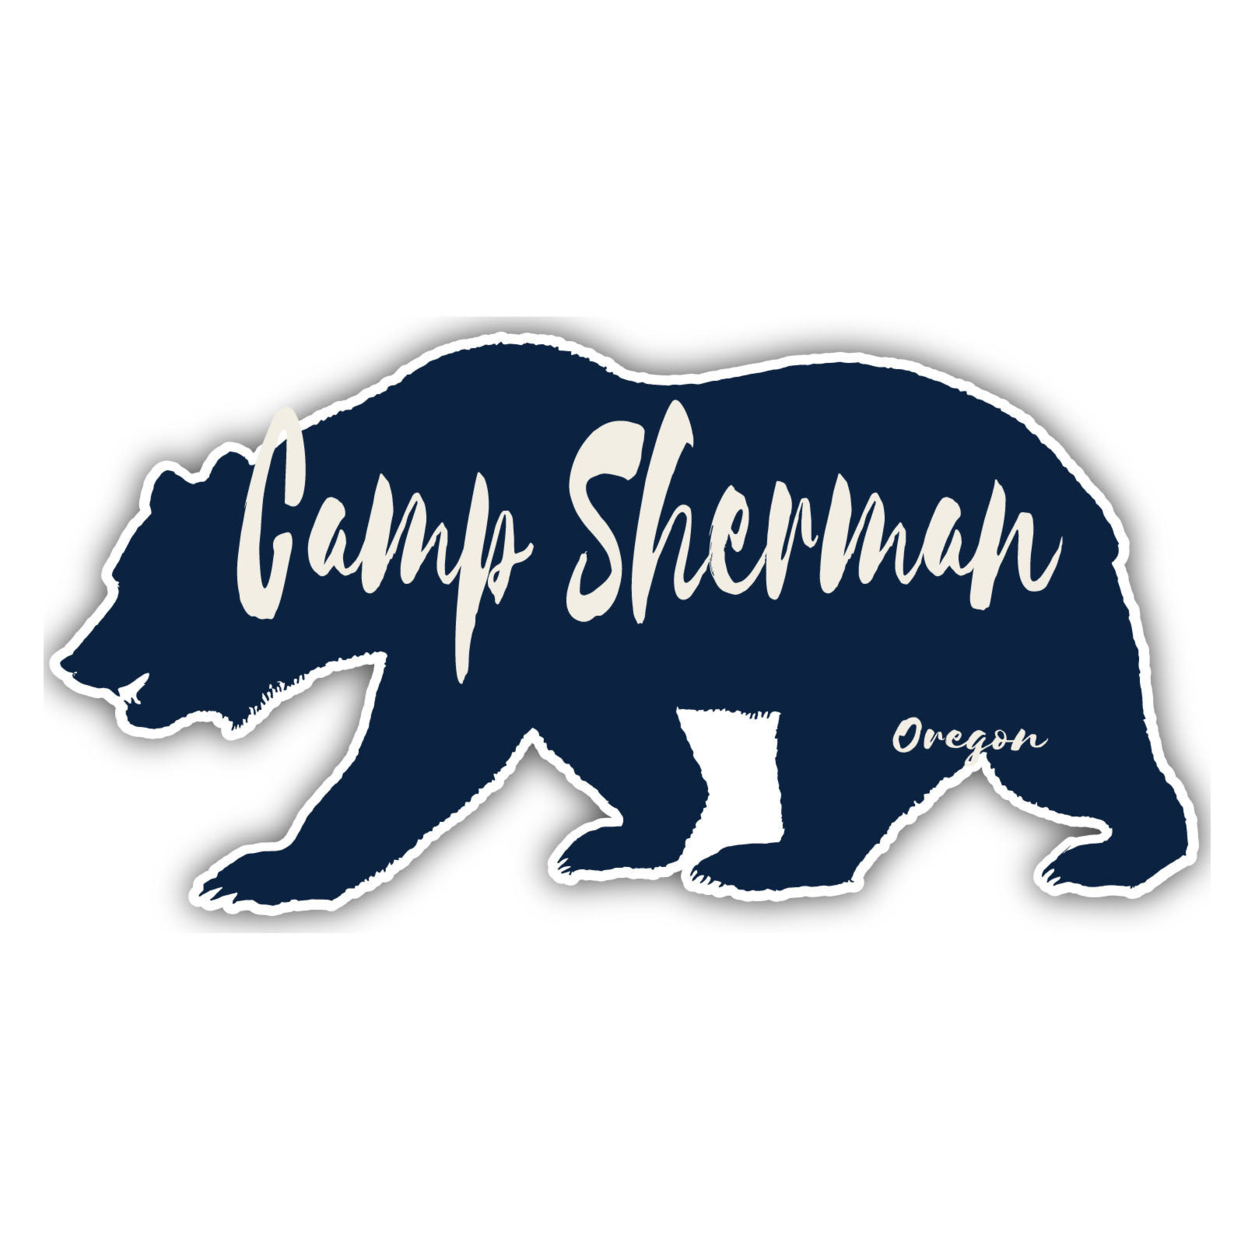 Camp Sherman Oregon Souvenir Decorative Stickers (Choose Theme And Size) - 4-Pack, 10-Inch, Bear